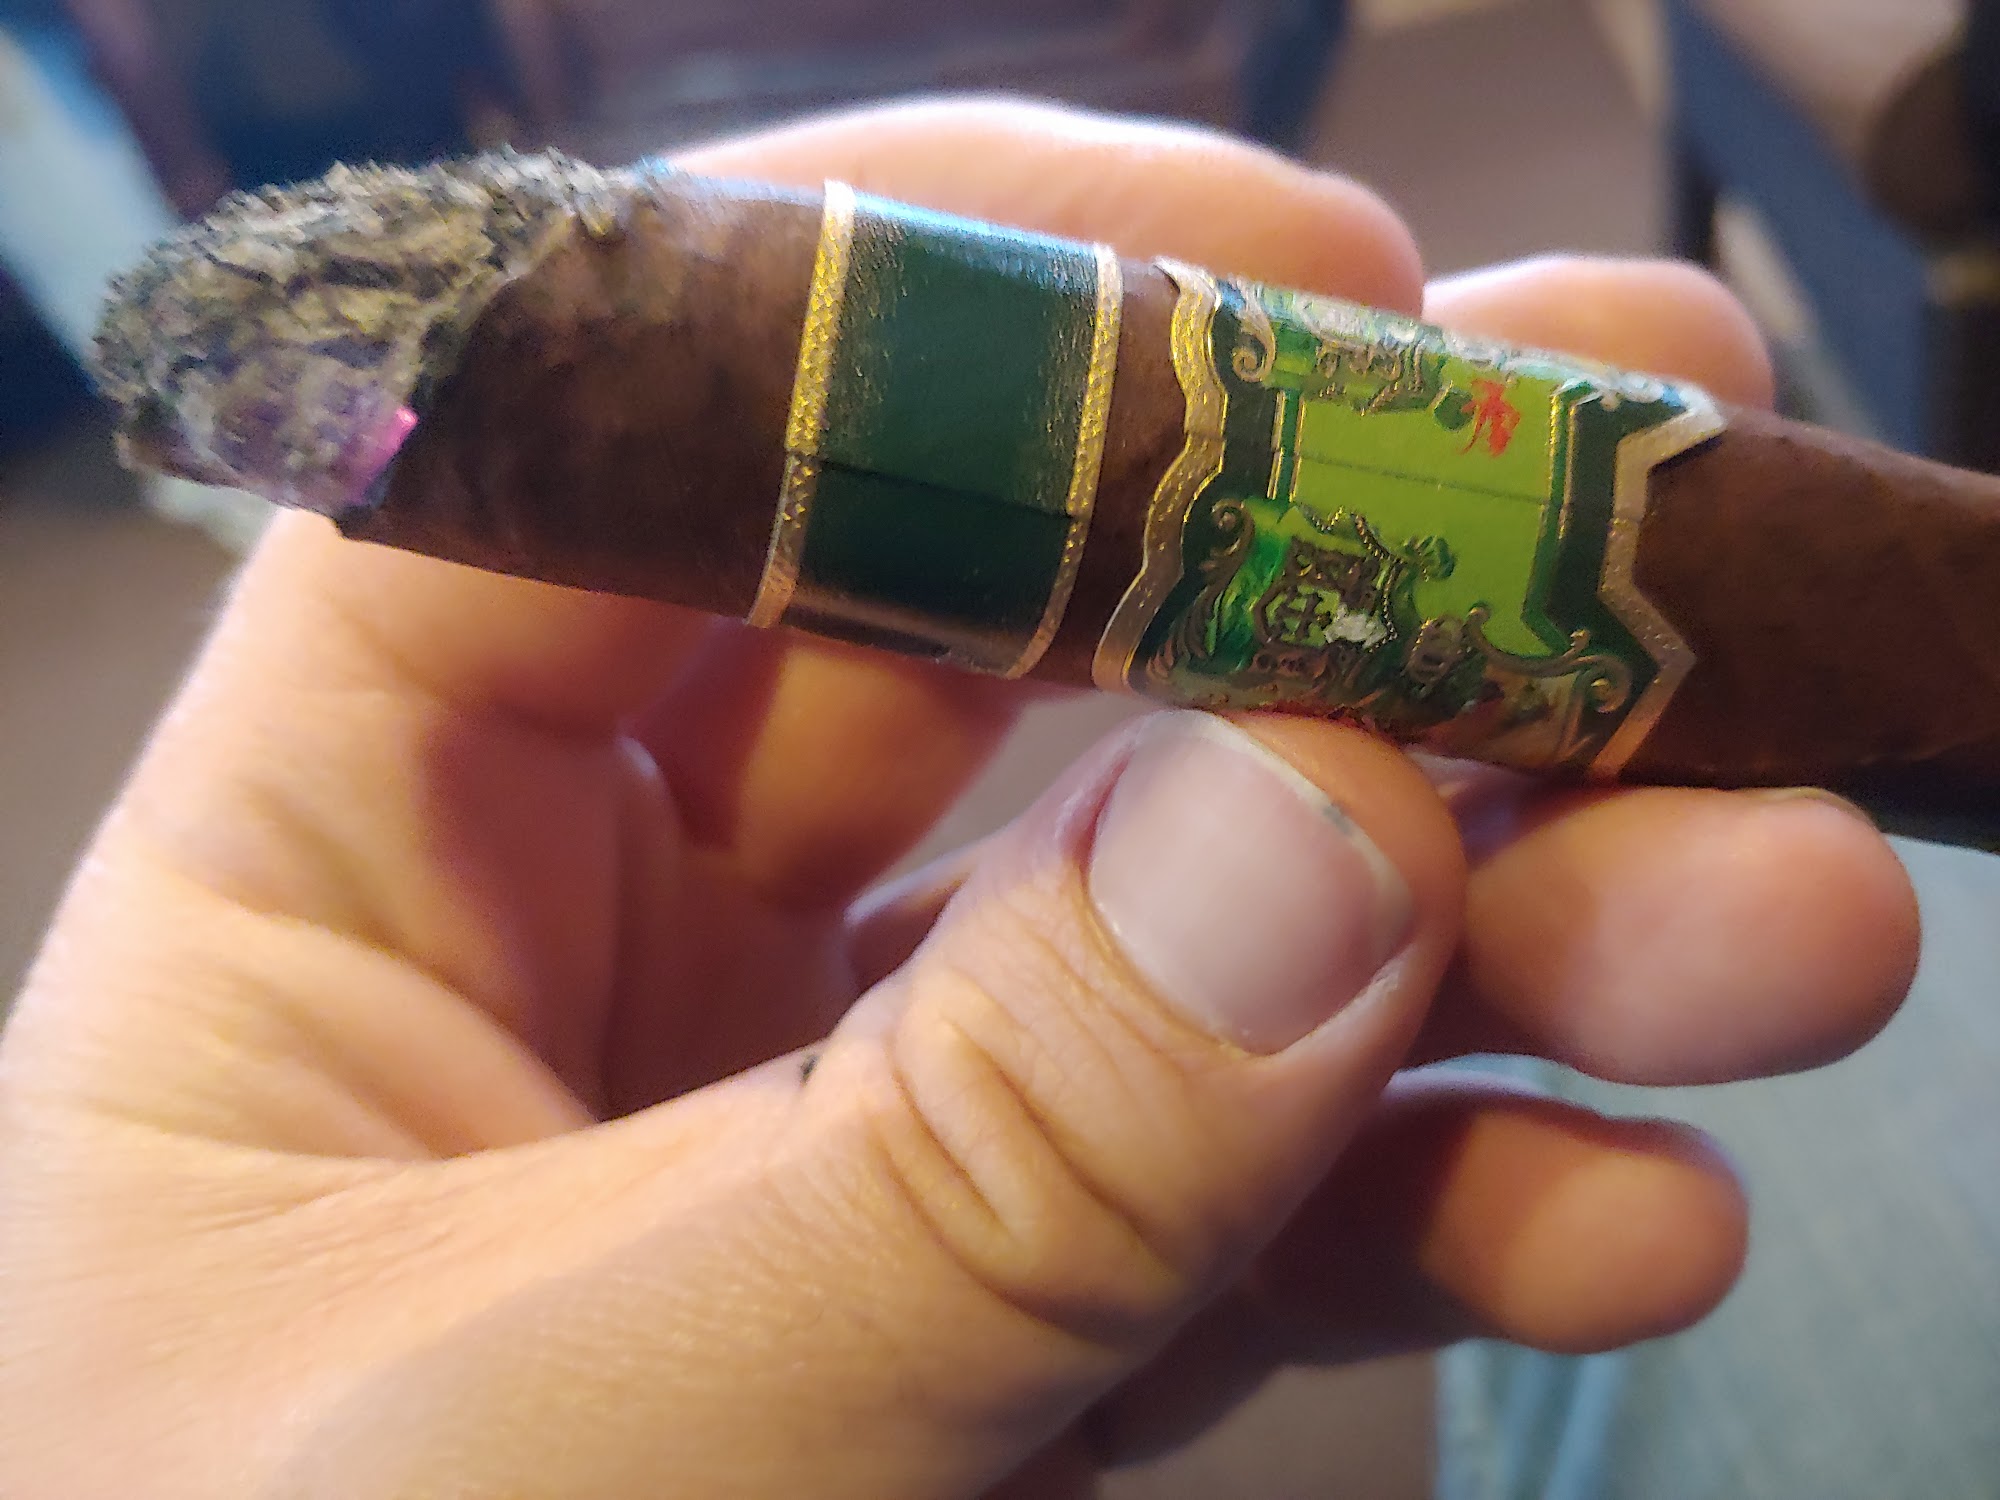 Churchills Quality Cigars & Gifts